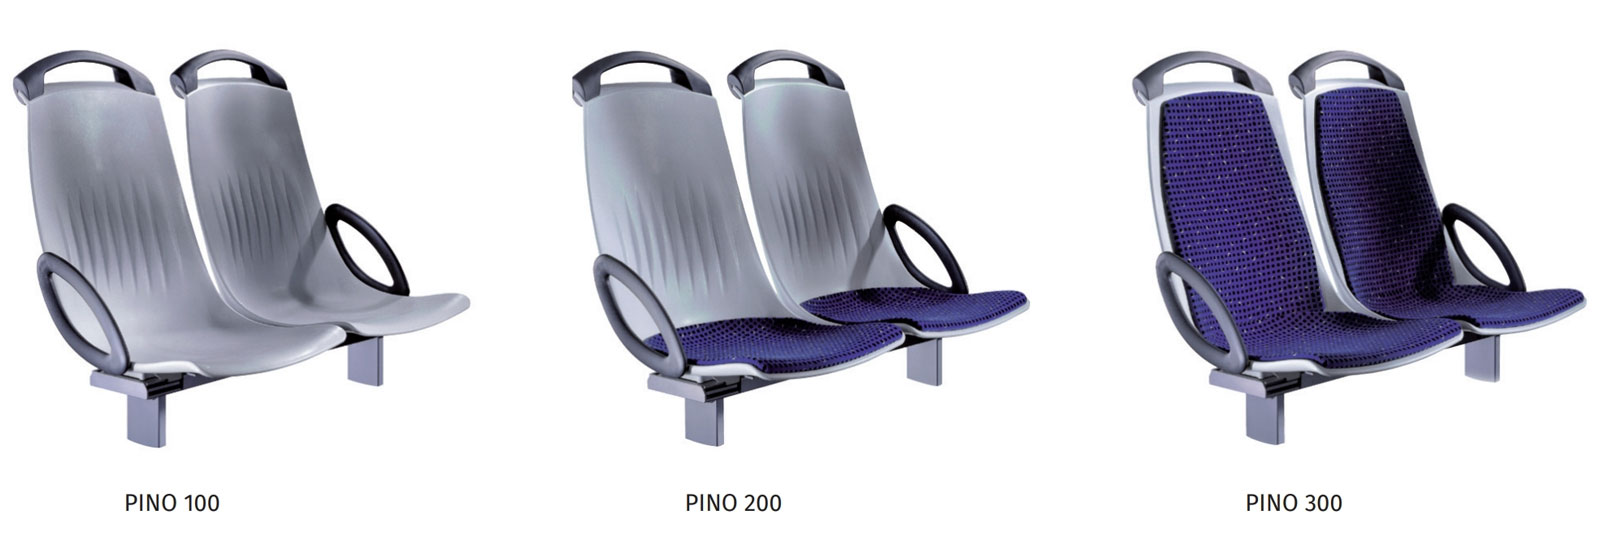 Pino | Seat versions